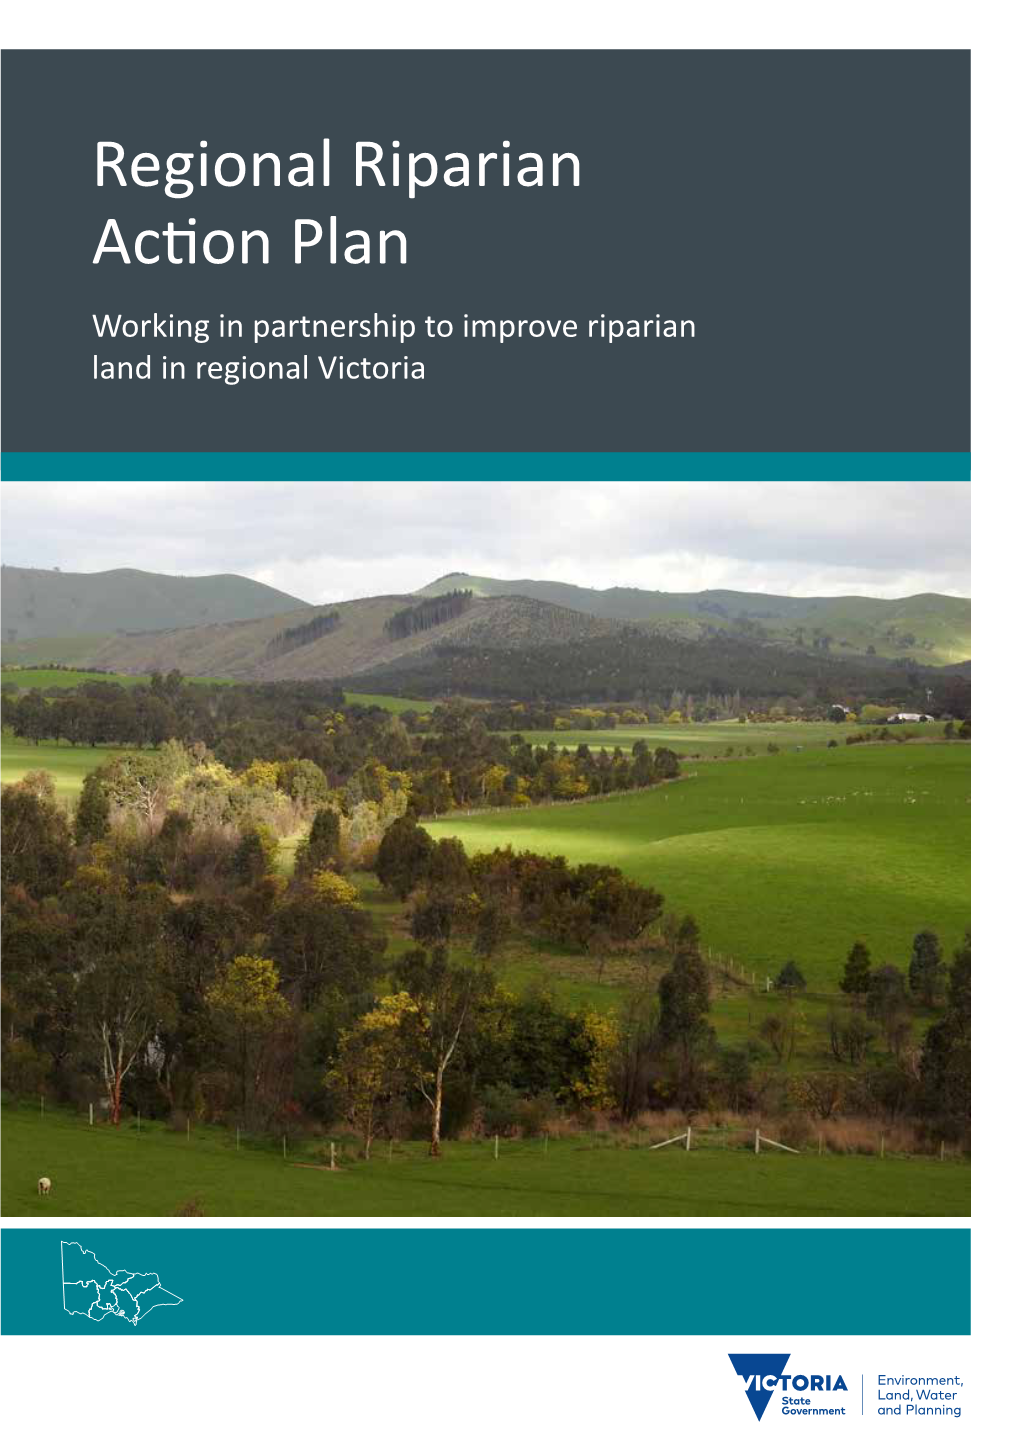 Regional Riparian Action Plan